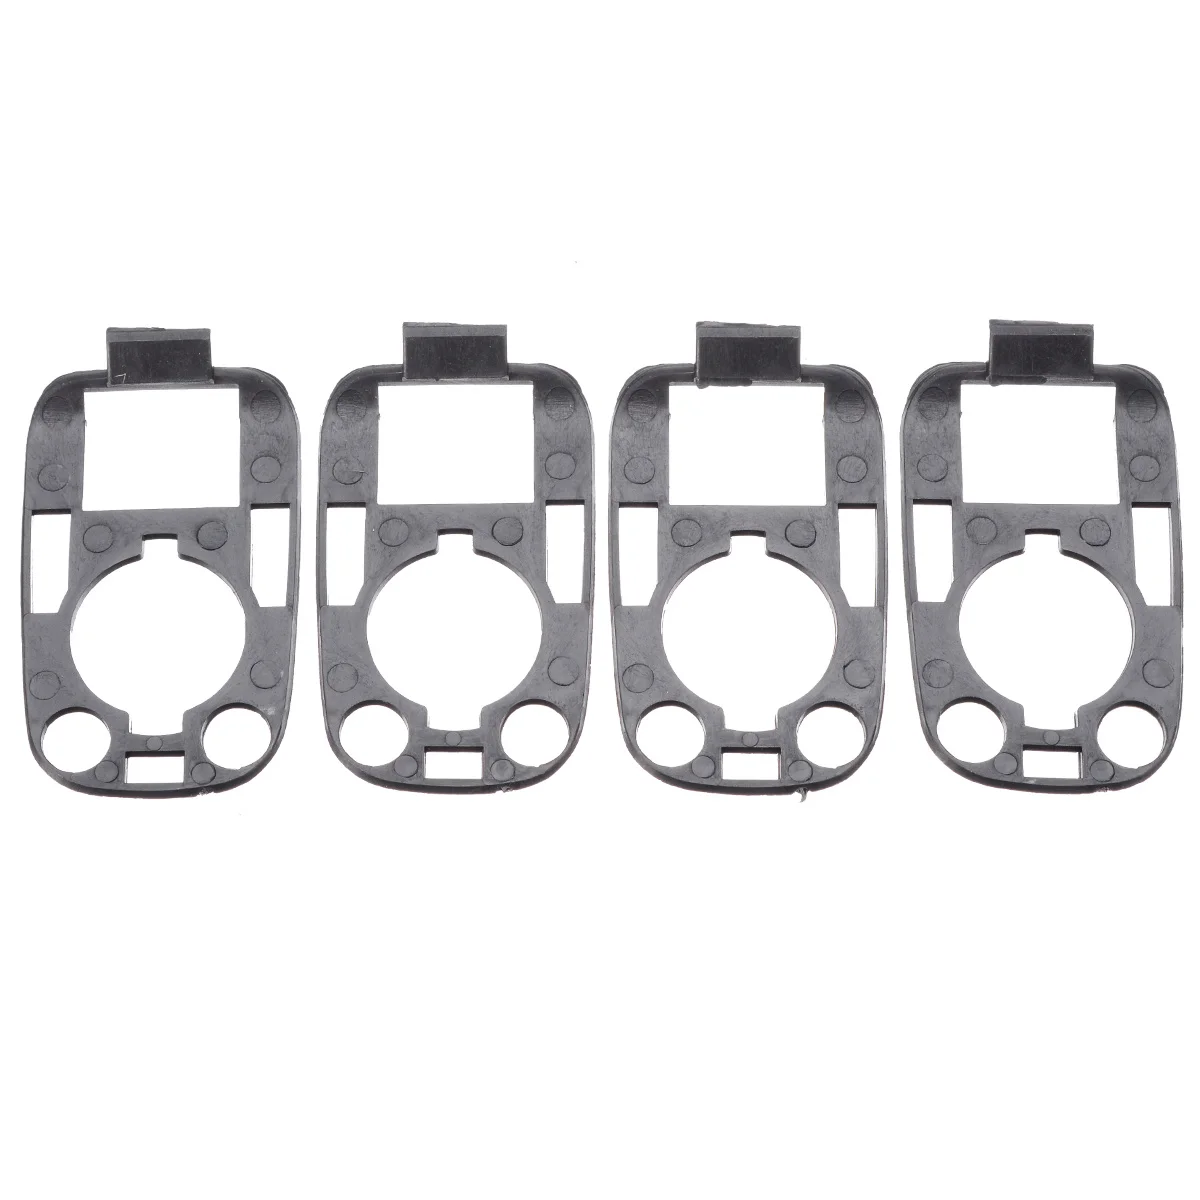 8pcs/set Left Right Car Door Handle End Cap Protective Lock Cover Kit For Peugeot 307 For Citroen C2 C3